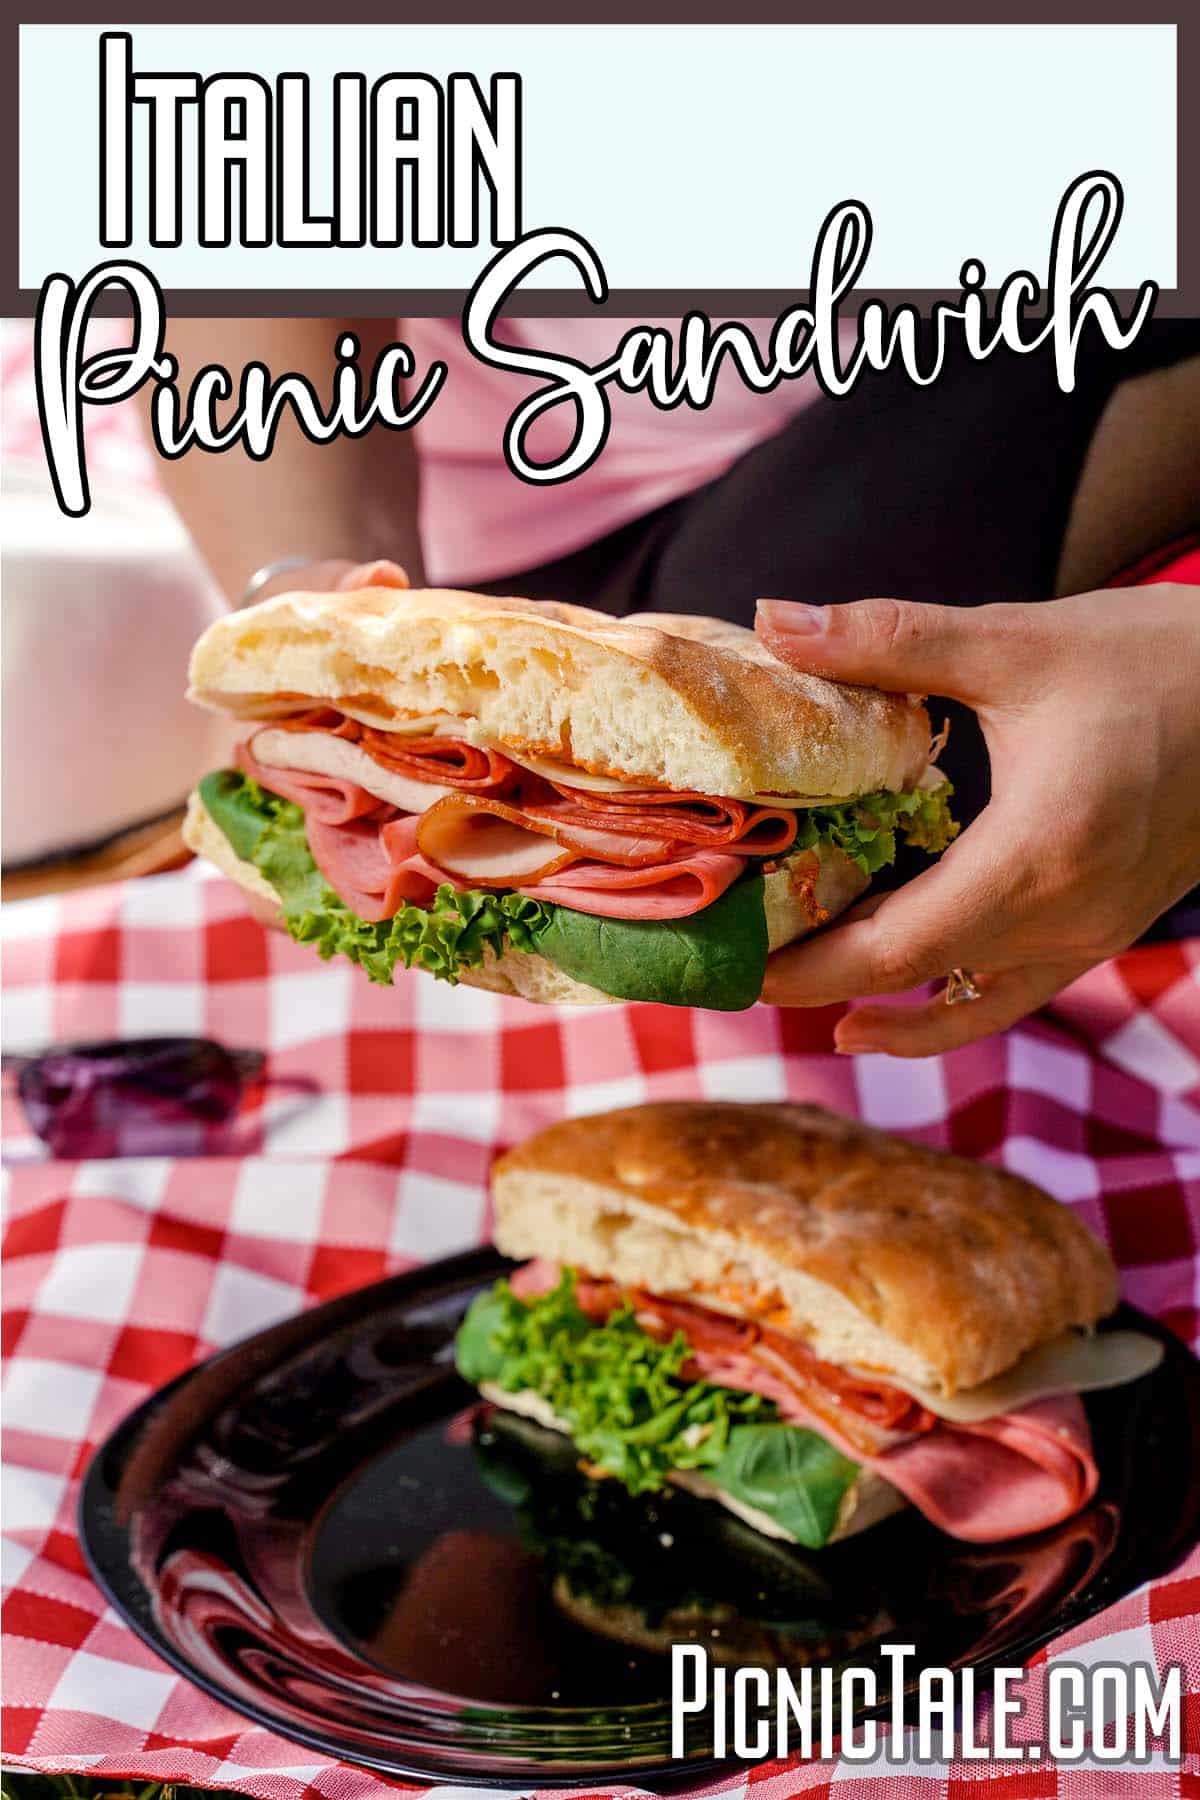 italian sandwich with text which reads italian picnic sandwich